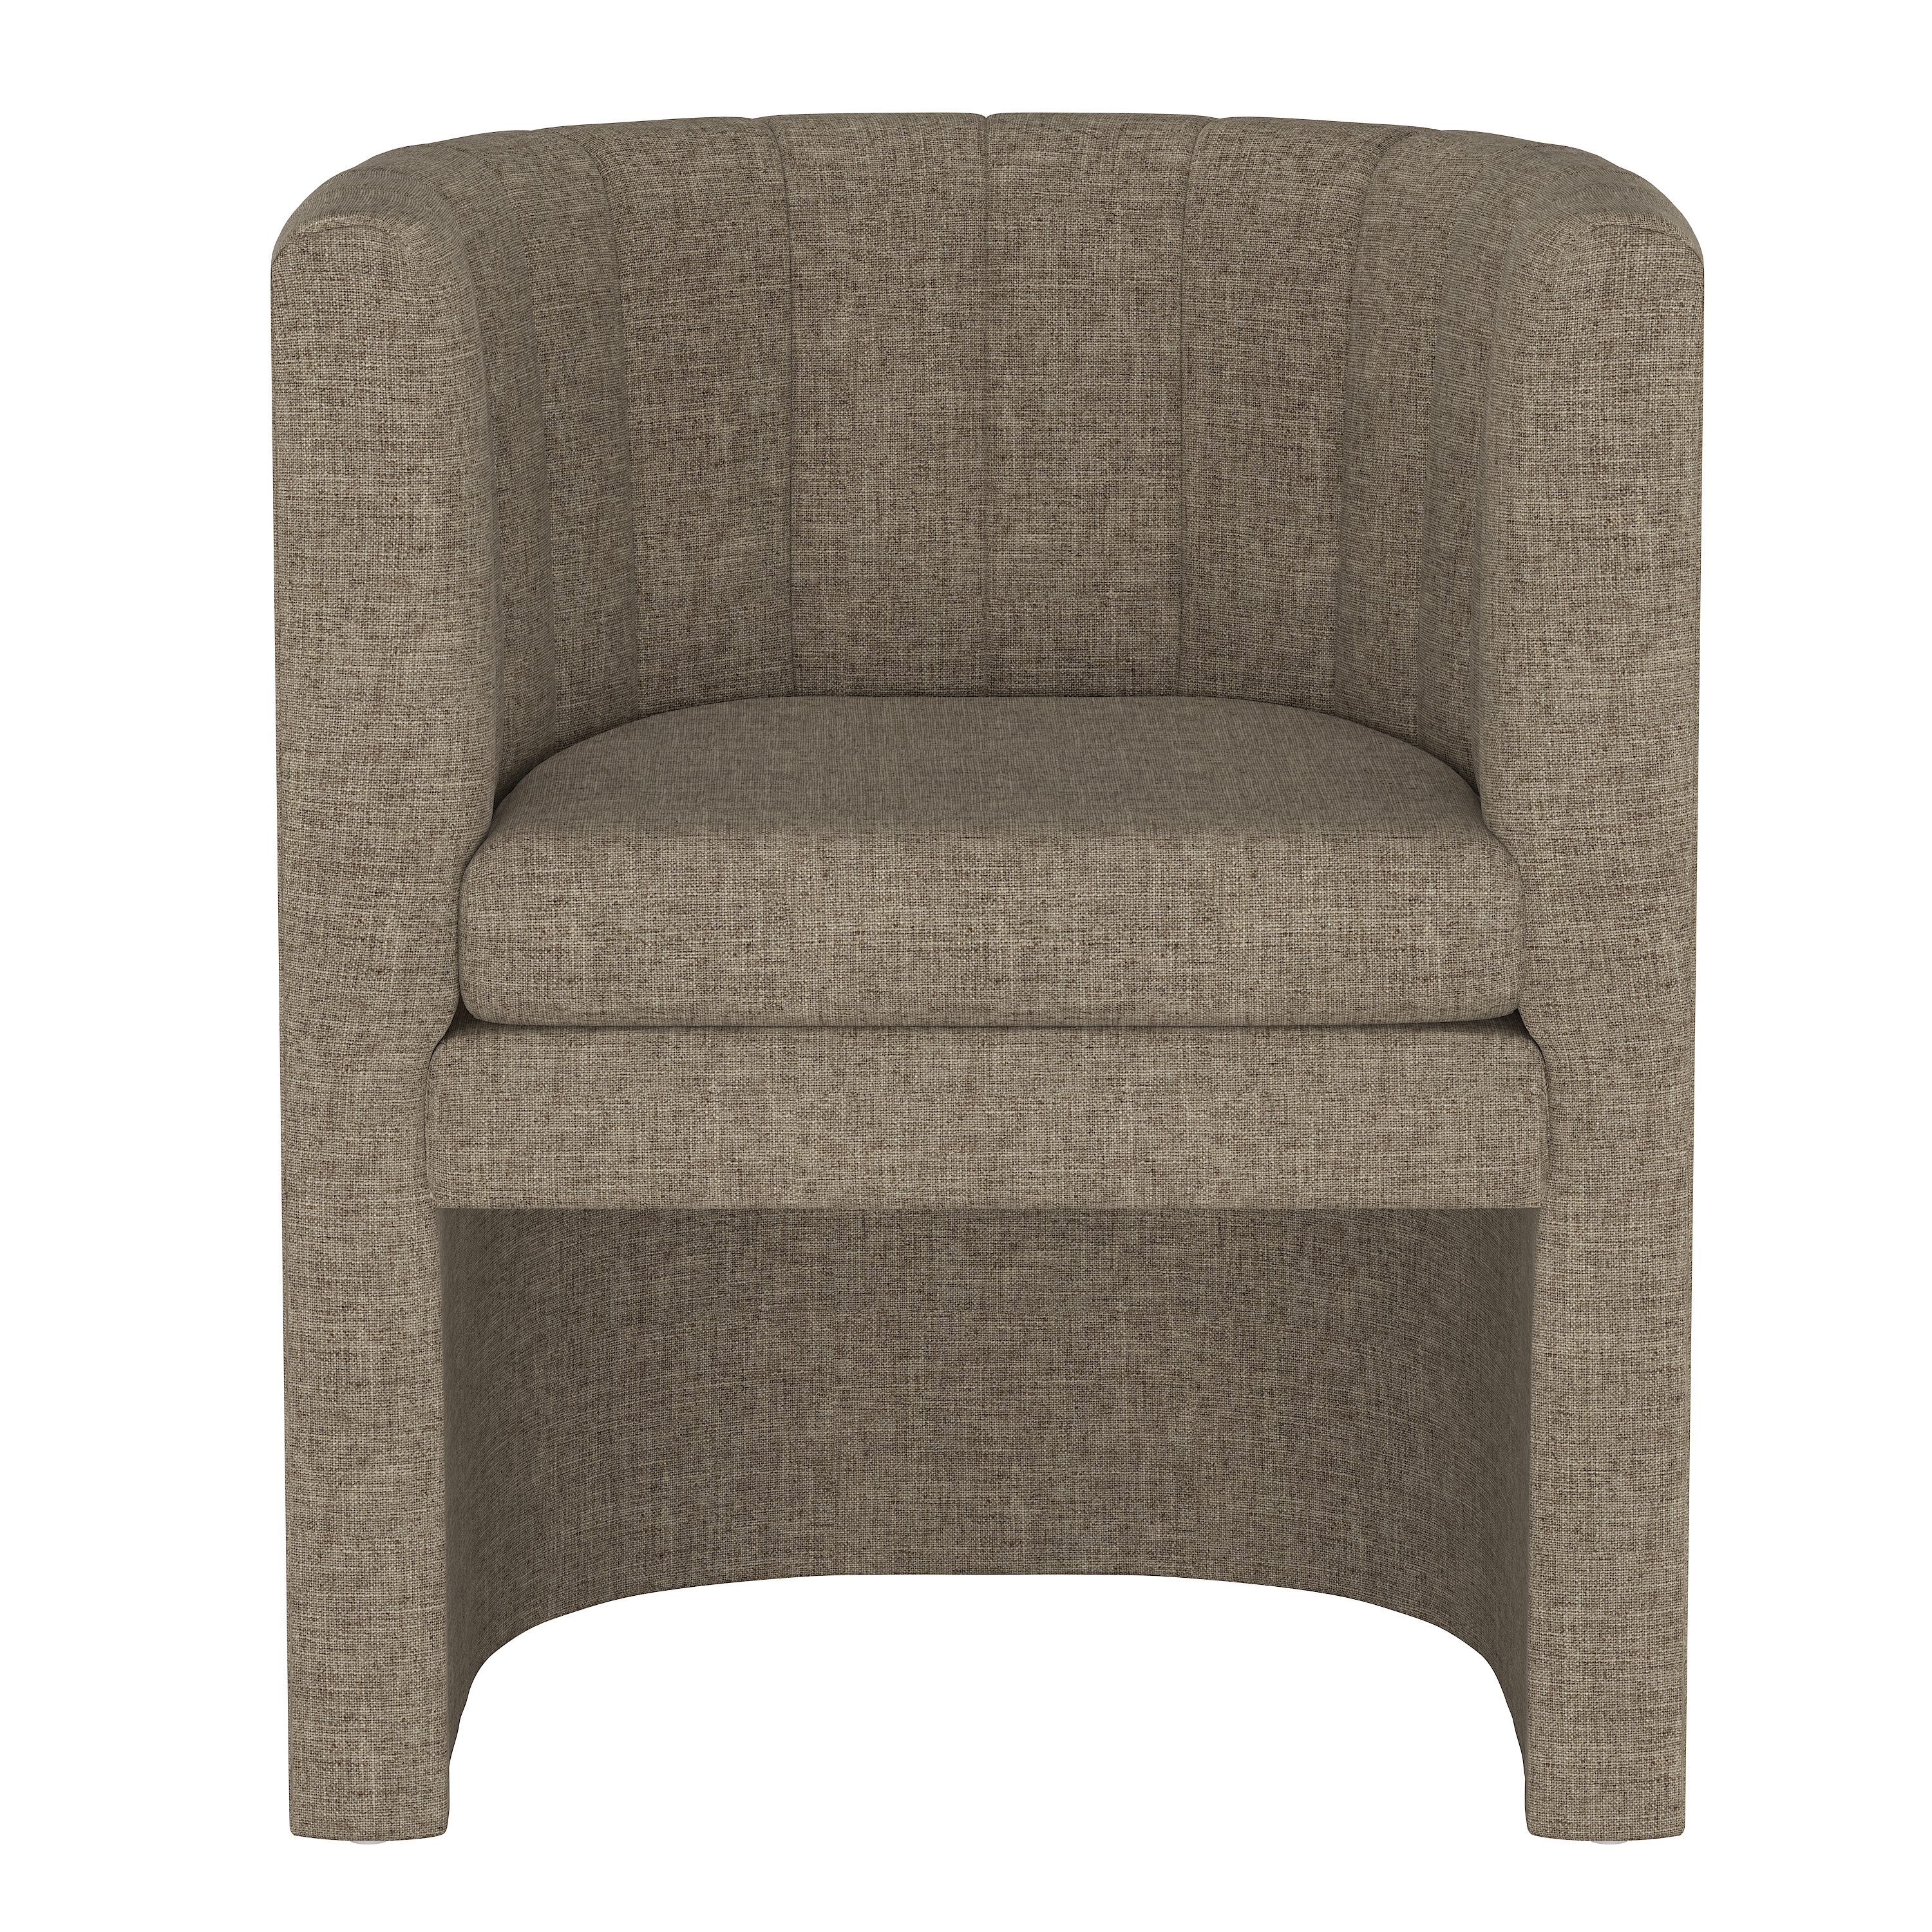 Wellshire Chair, Linen - Image 1